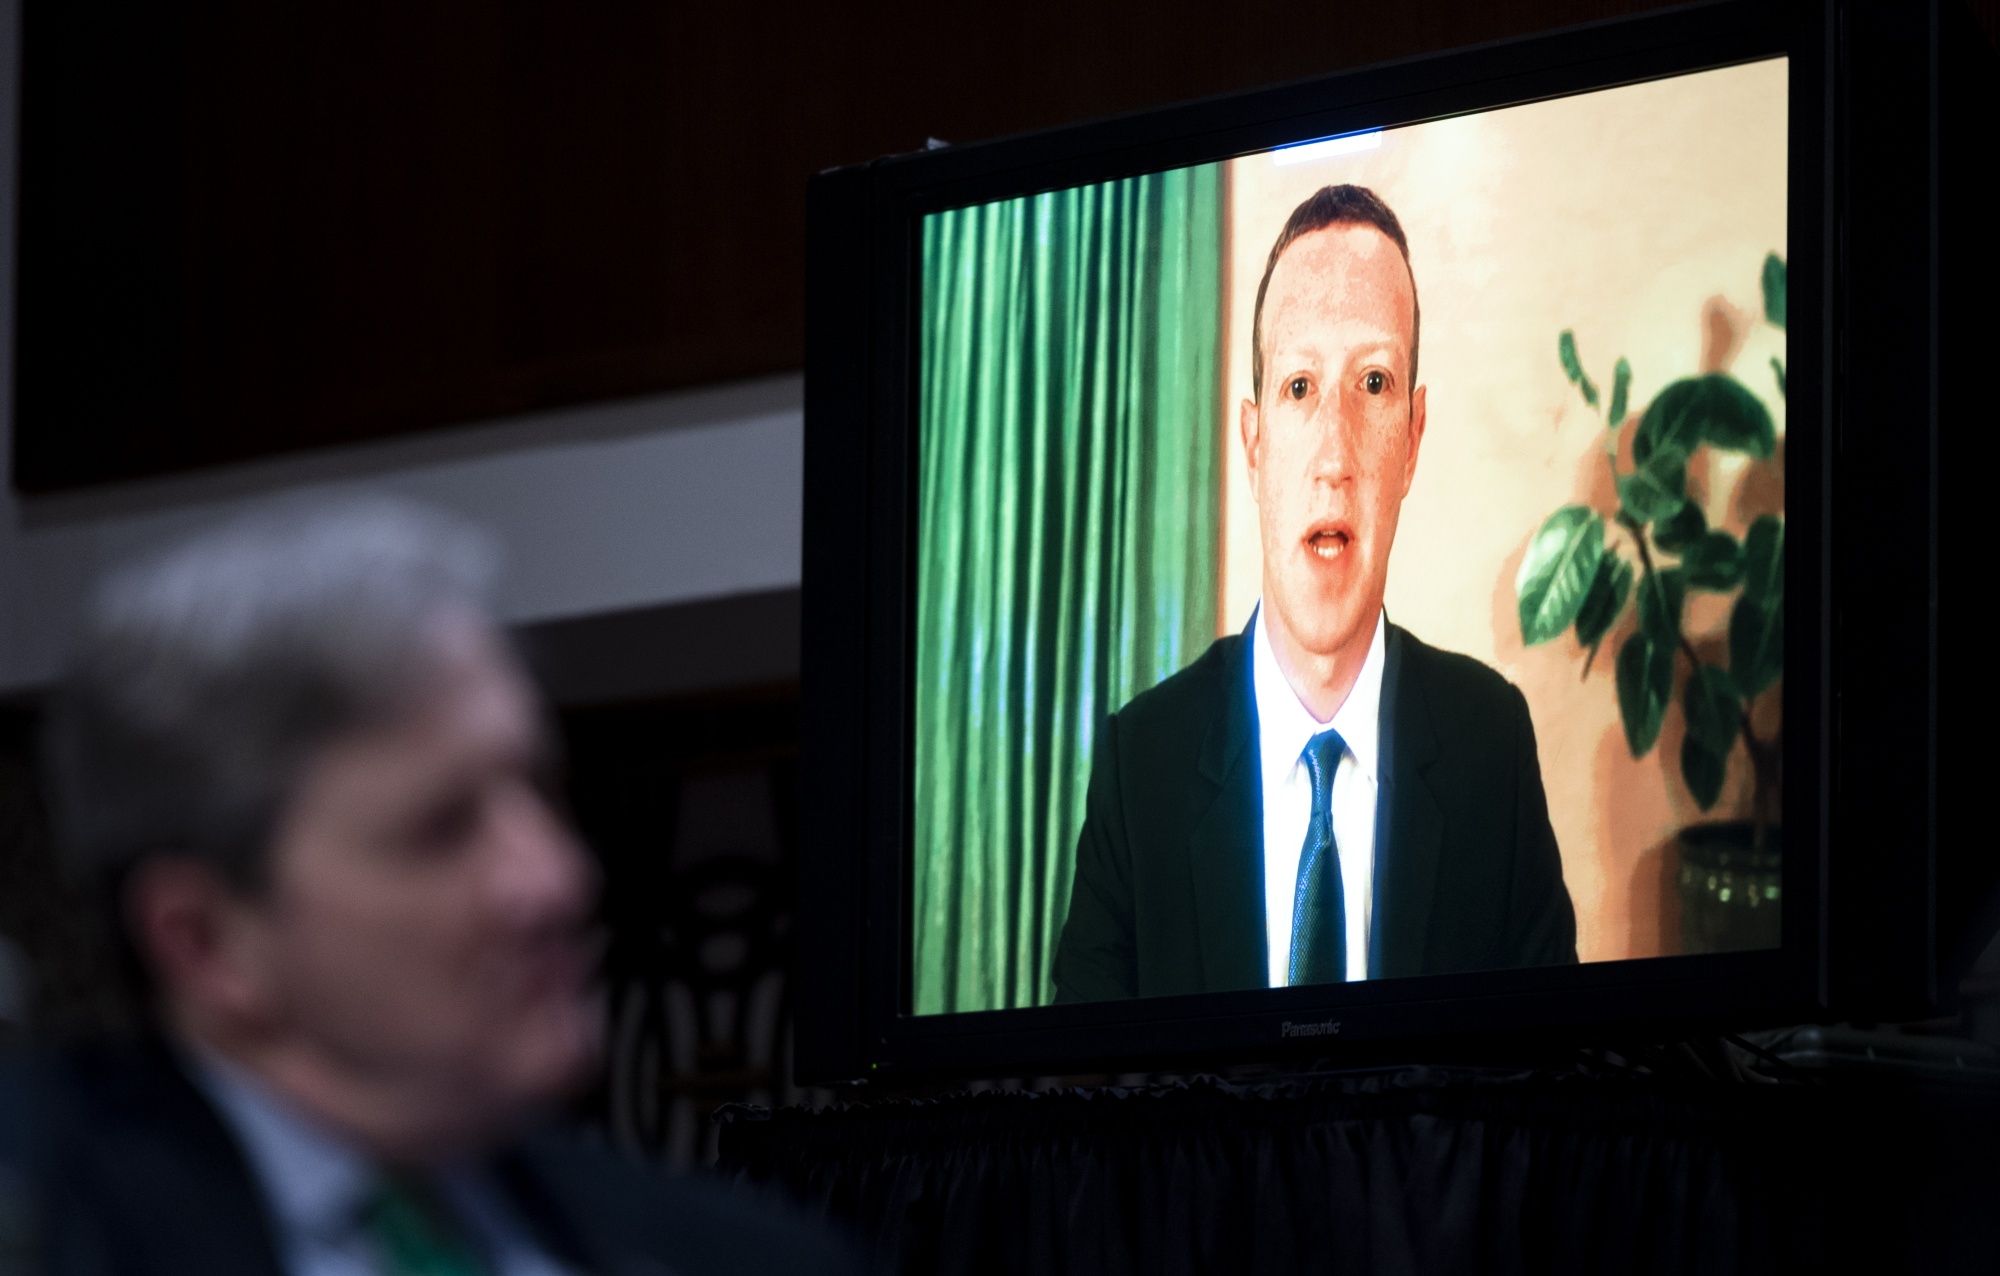 Mark Zuckerberg speaks remotely during the&nbsp;Senate Judiciary Committee hearing in Washington, D.C. on Nov. 18.